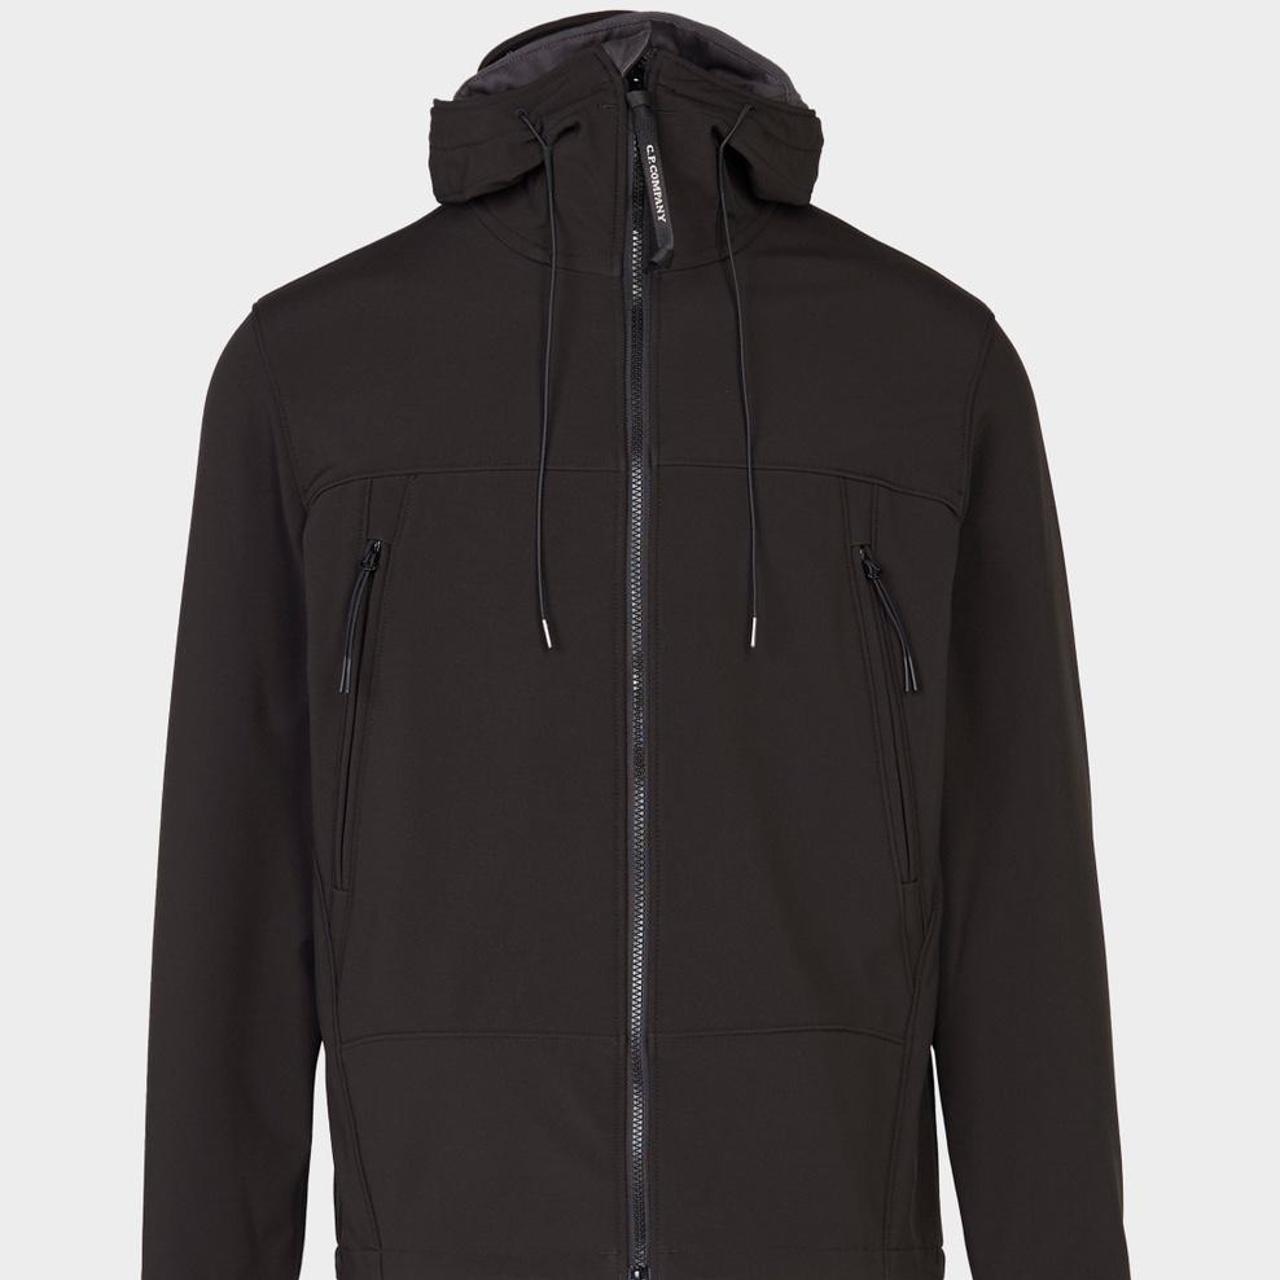 Black CP company soft shell jacket. Size XL, fits... - Depop